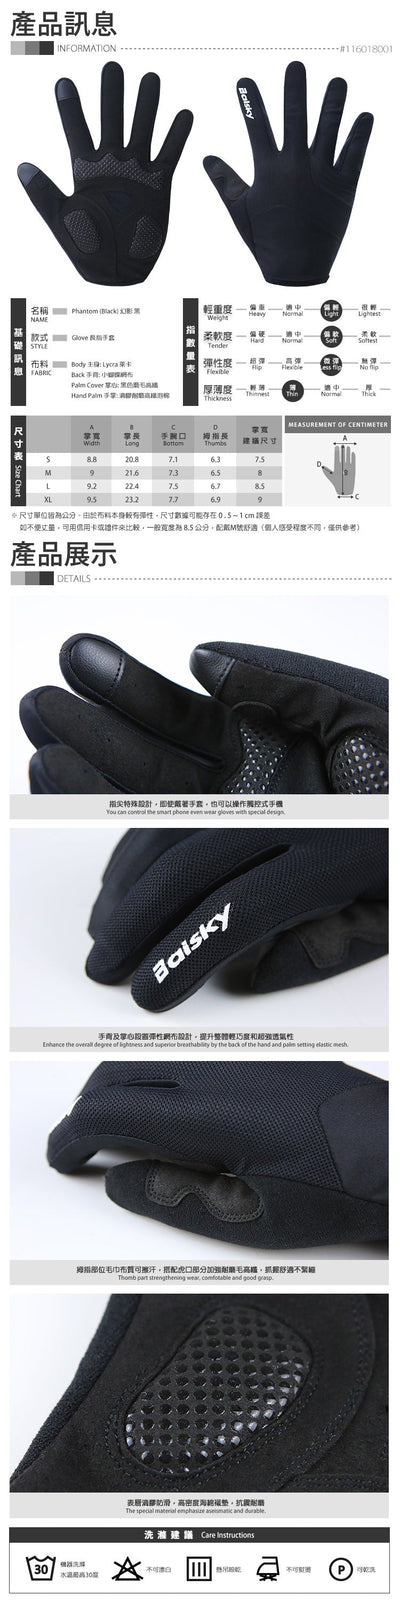 Baisky Bicycle Gloves TRG450 - Phantom Black - Cyclop.in